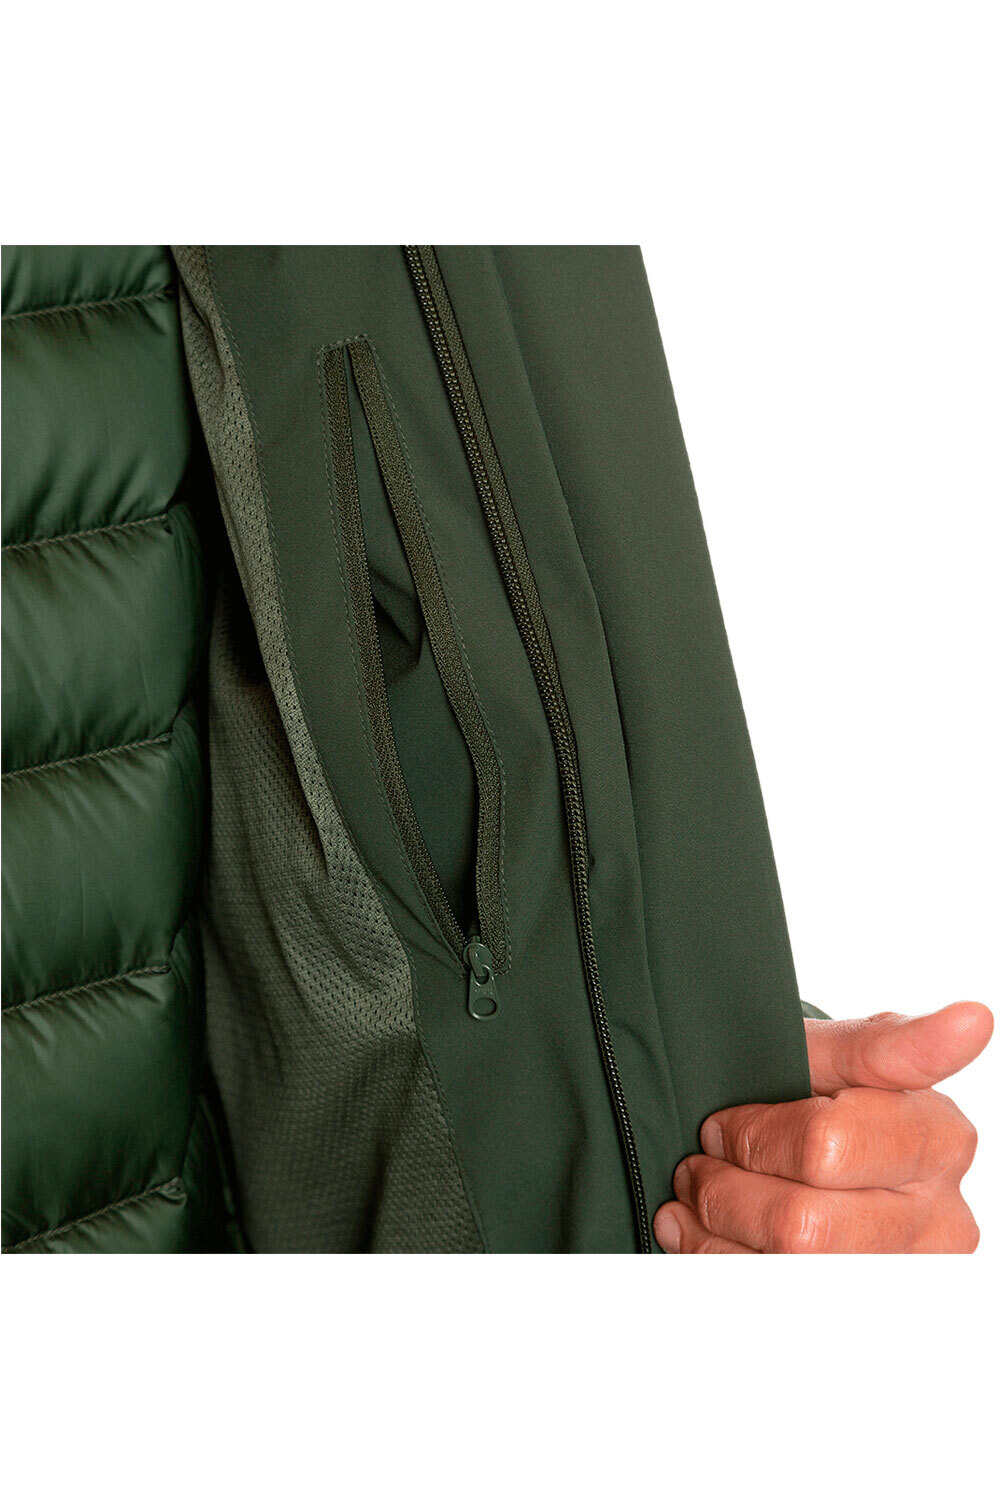 Trango chaqueta impermeable insulada hombre LEPSALA COMPLET 06